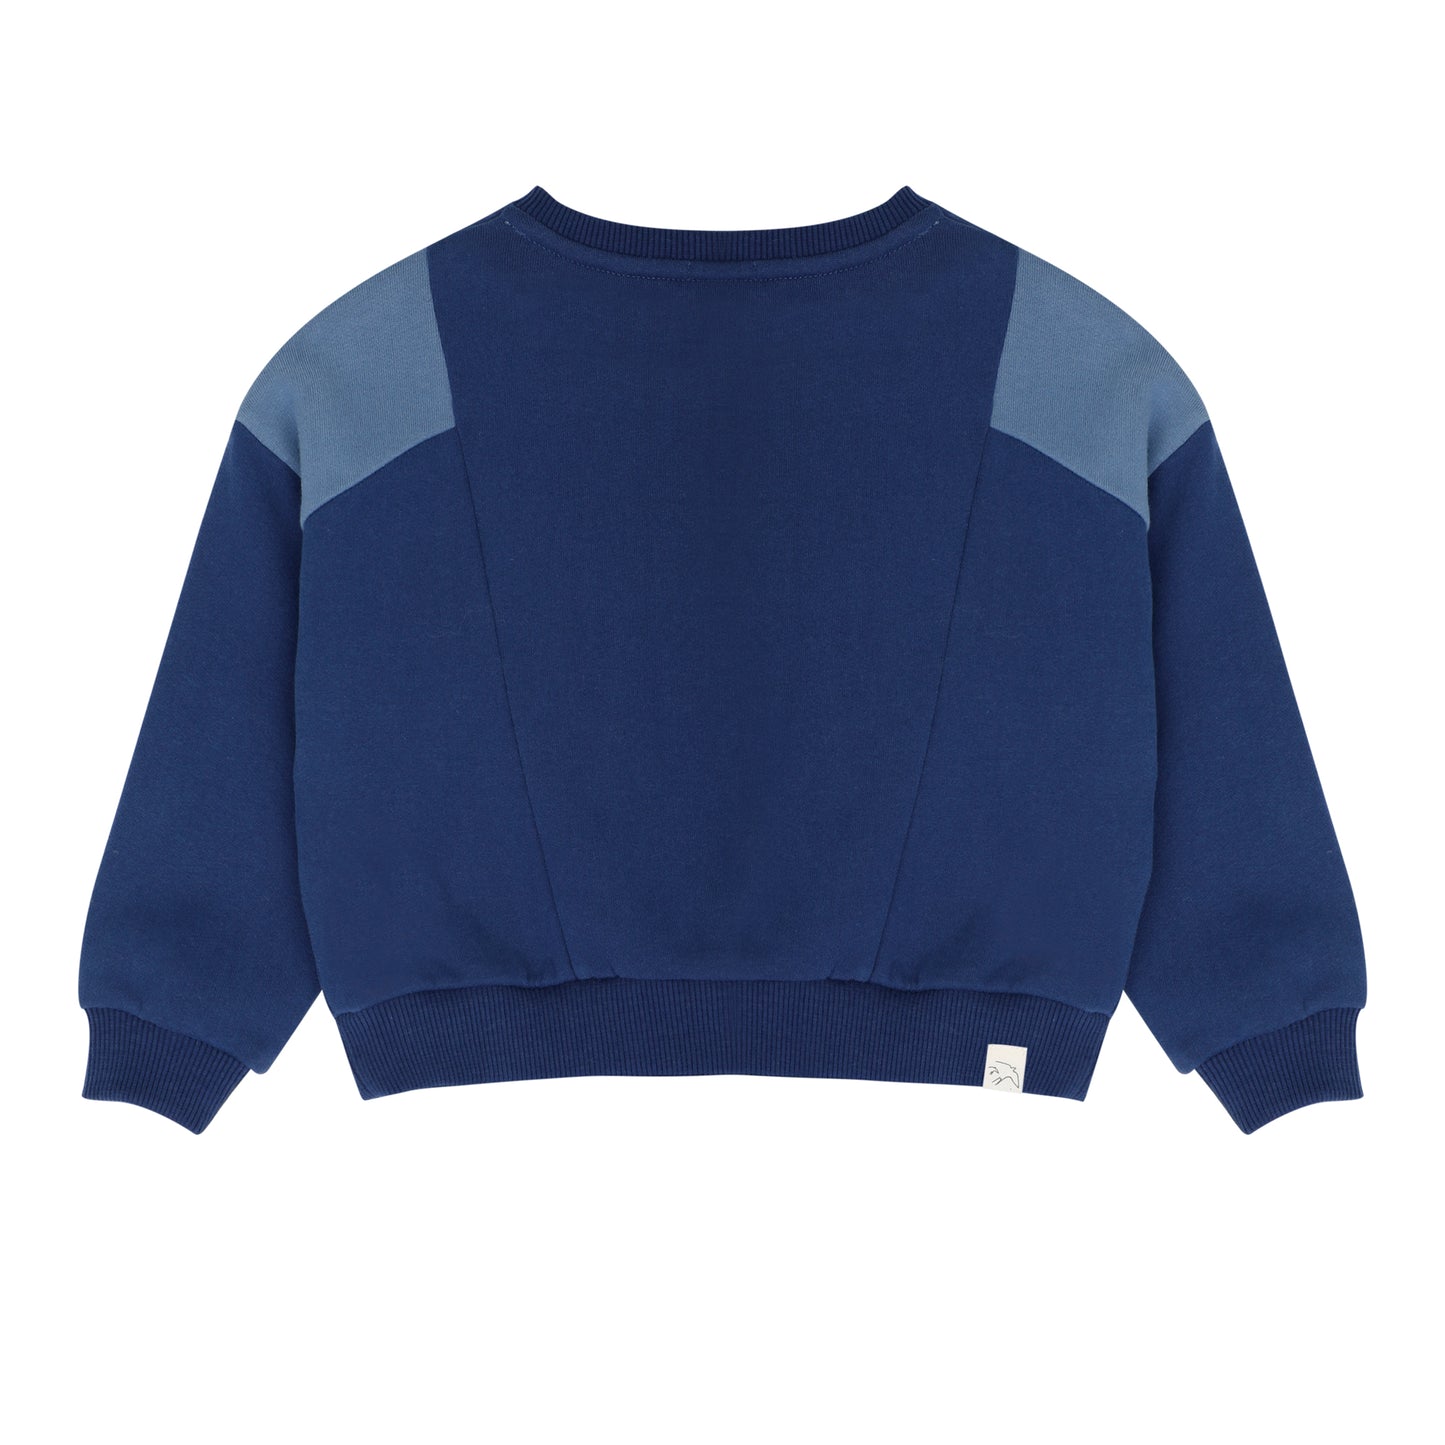 nest sweater - marine blue